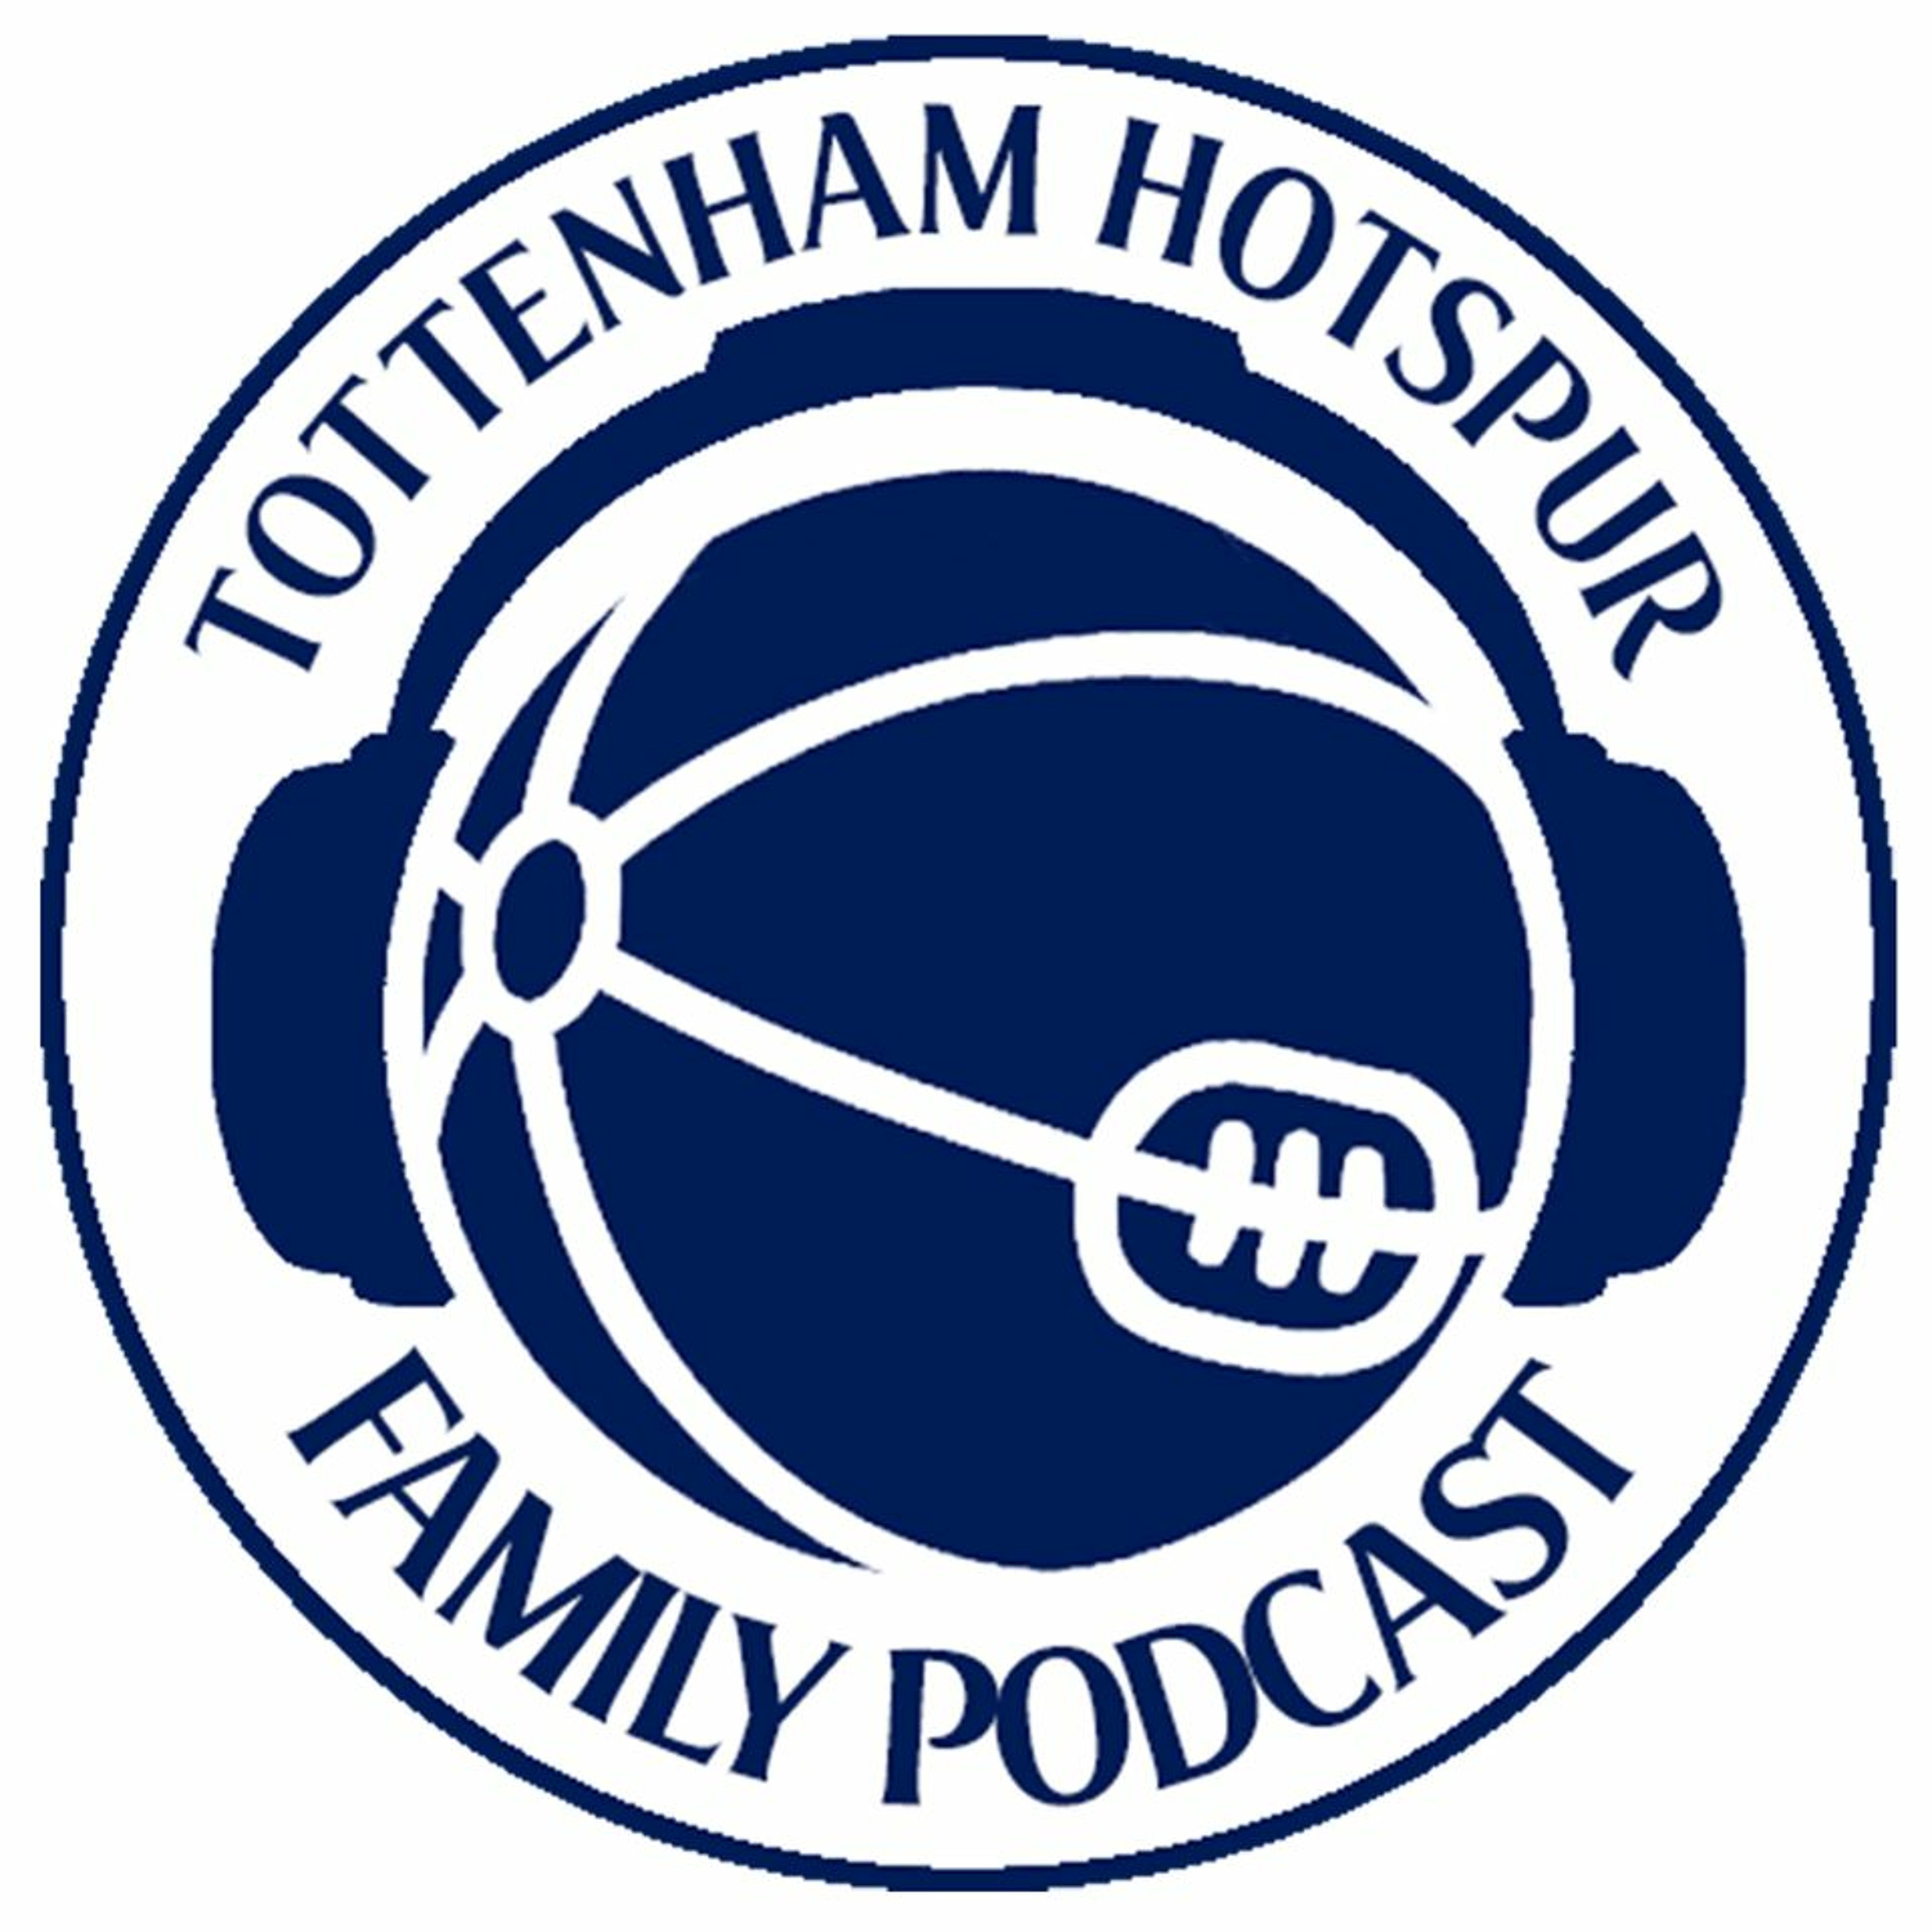 The Tottenham Hotspur Family Podcast - S5EP20 It's pronounced Foyth, not Foyth